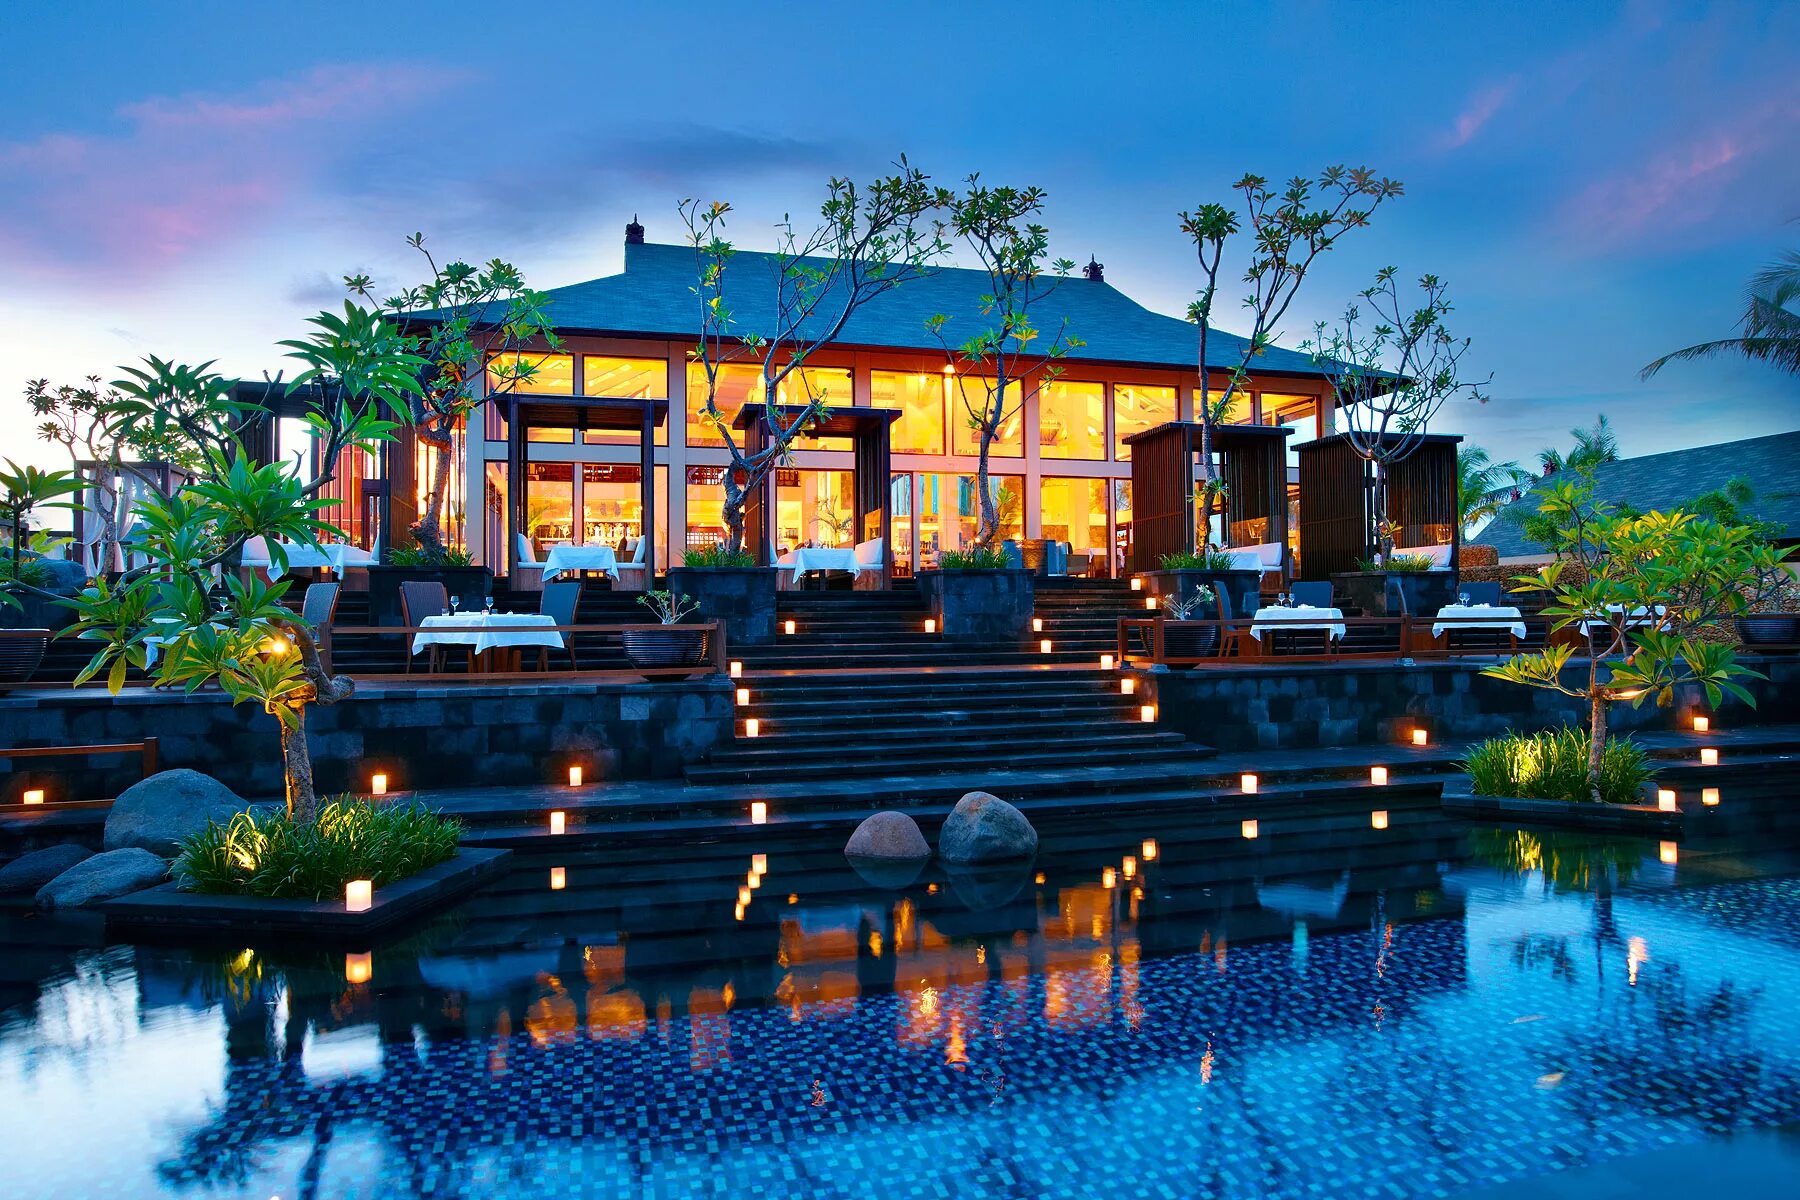 St. Regis 5* Бали. Индонезия Бали. Отель St Regis Бали фото. Терраса Бали бунгало. Как называется бали